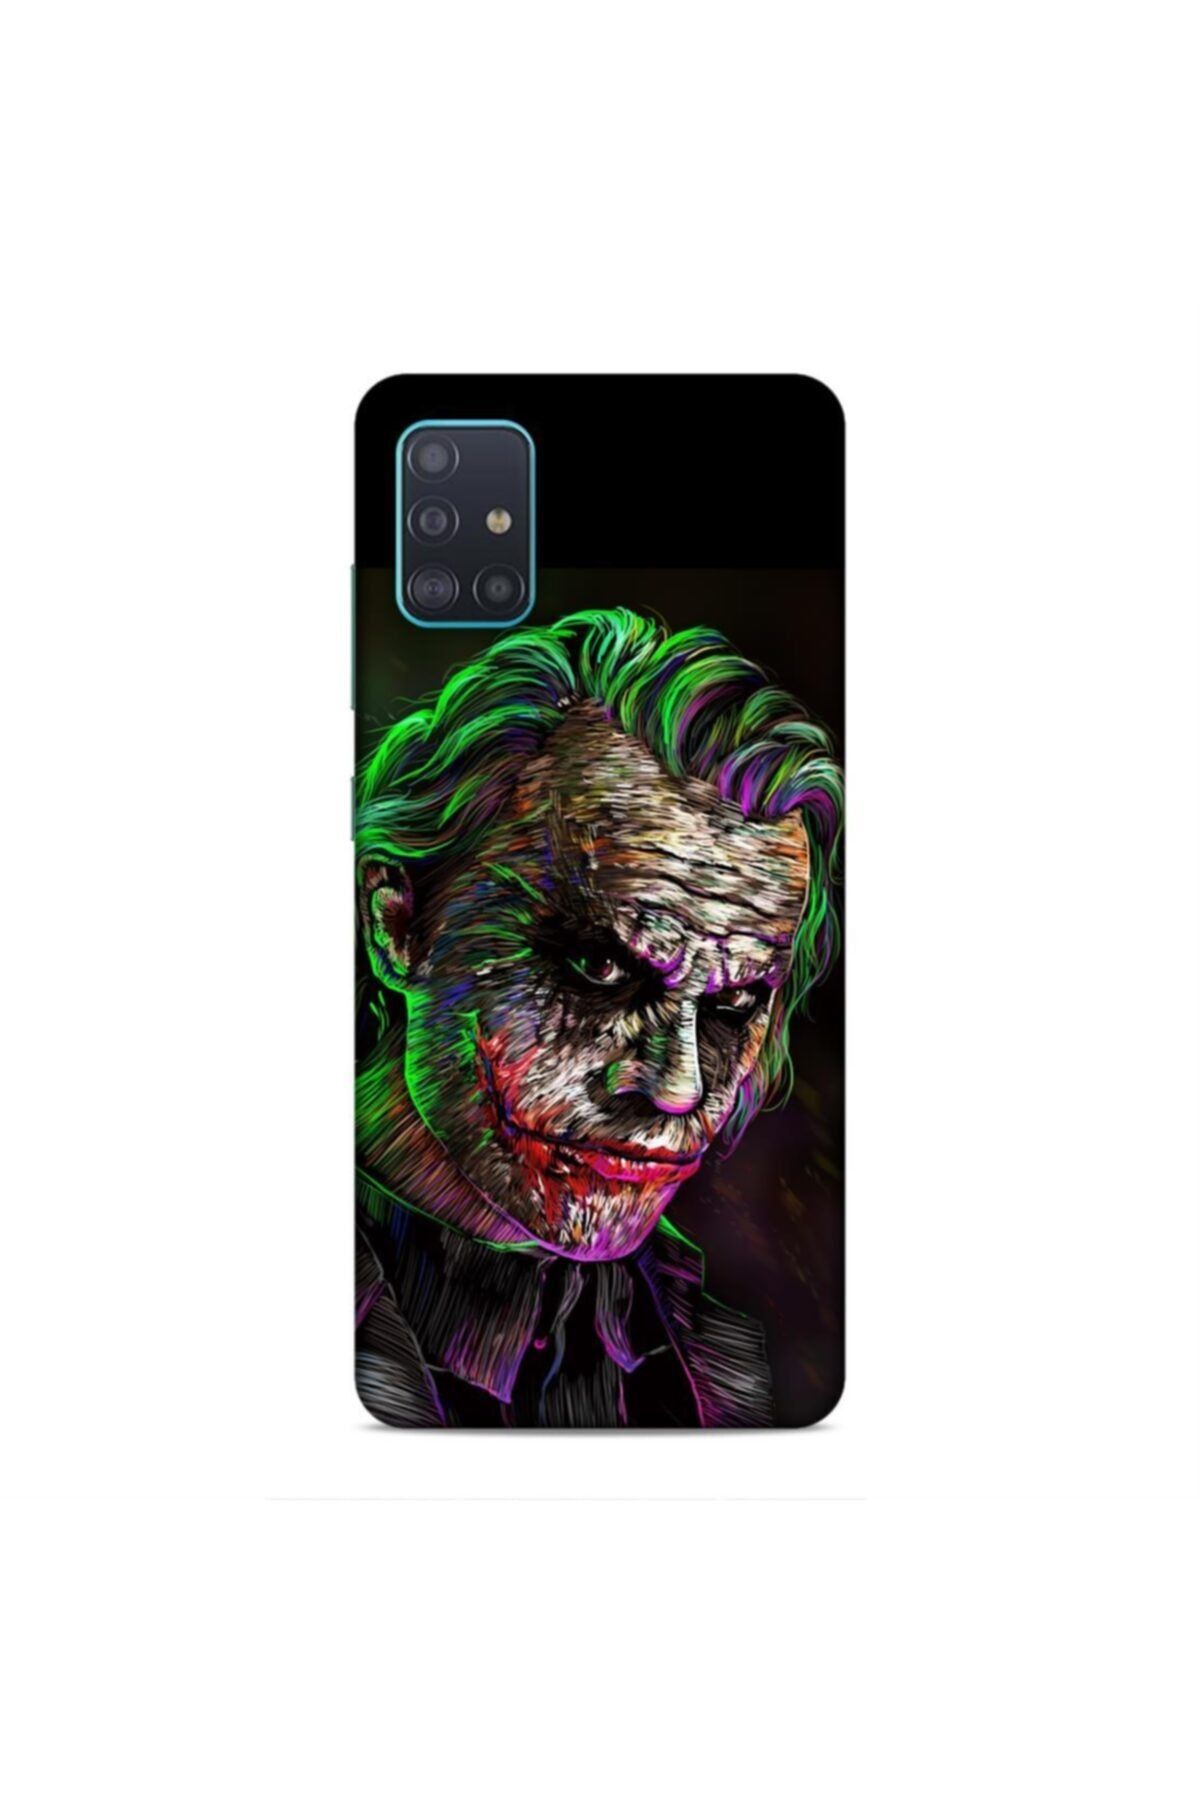 Pickcase Samsung Galaxy A51 Desenli Arka Kapak Renkli Jokker Kılıf